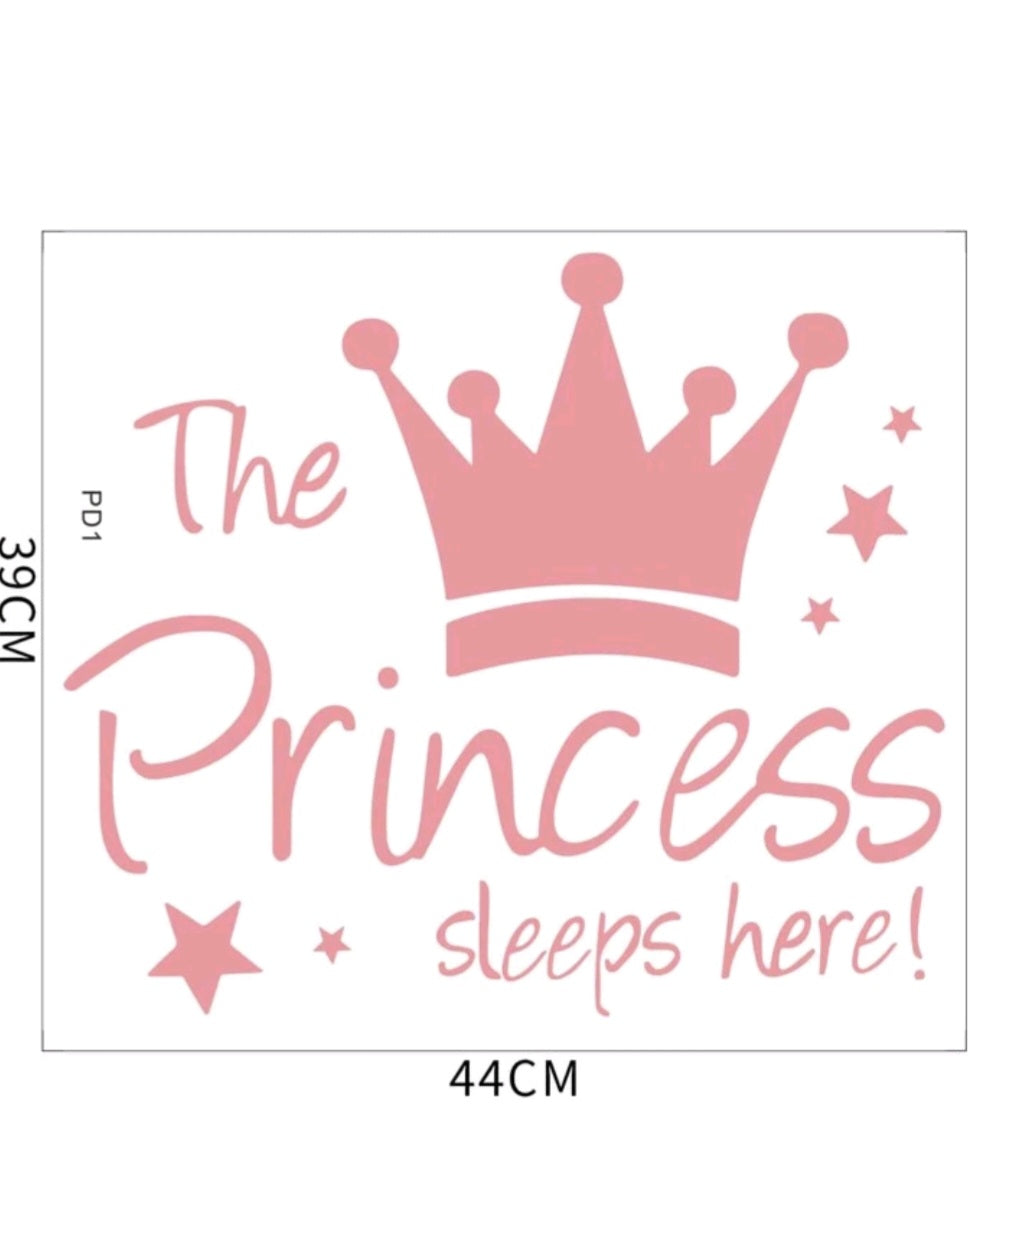 Tha Princess Sleeps Here Wall Sticker